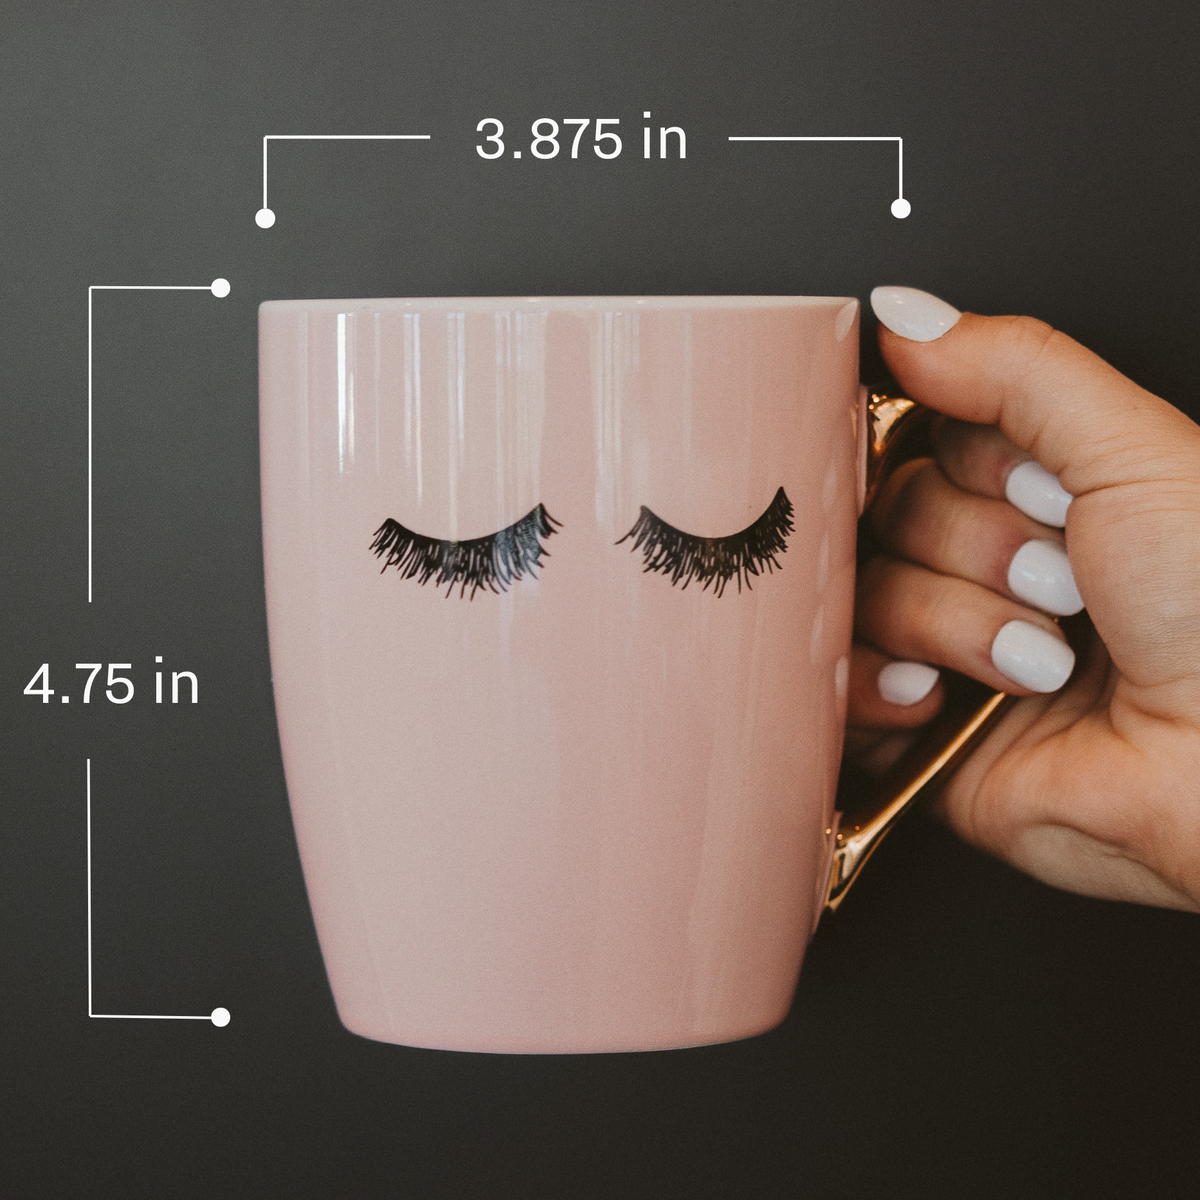 Eyelashes Coffee Mug - Gifts & Home Decor